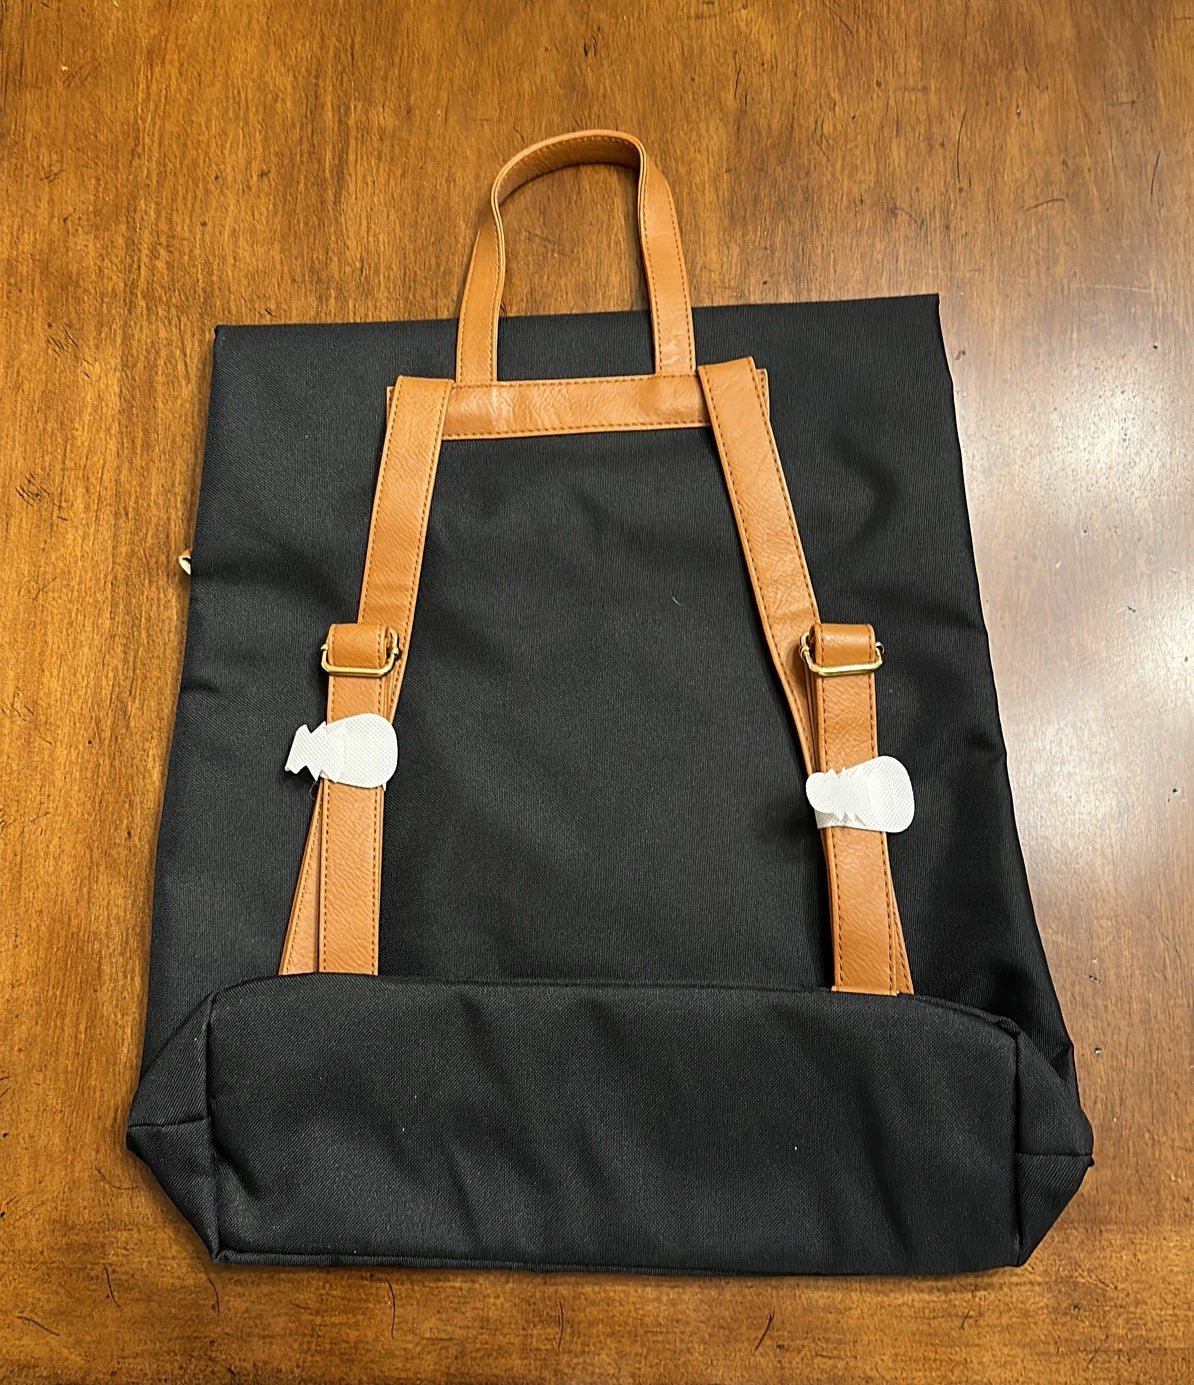 Backpack dD16Iy02S